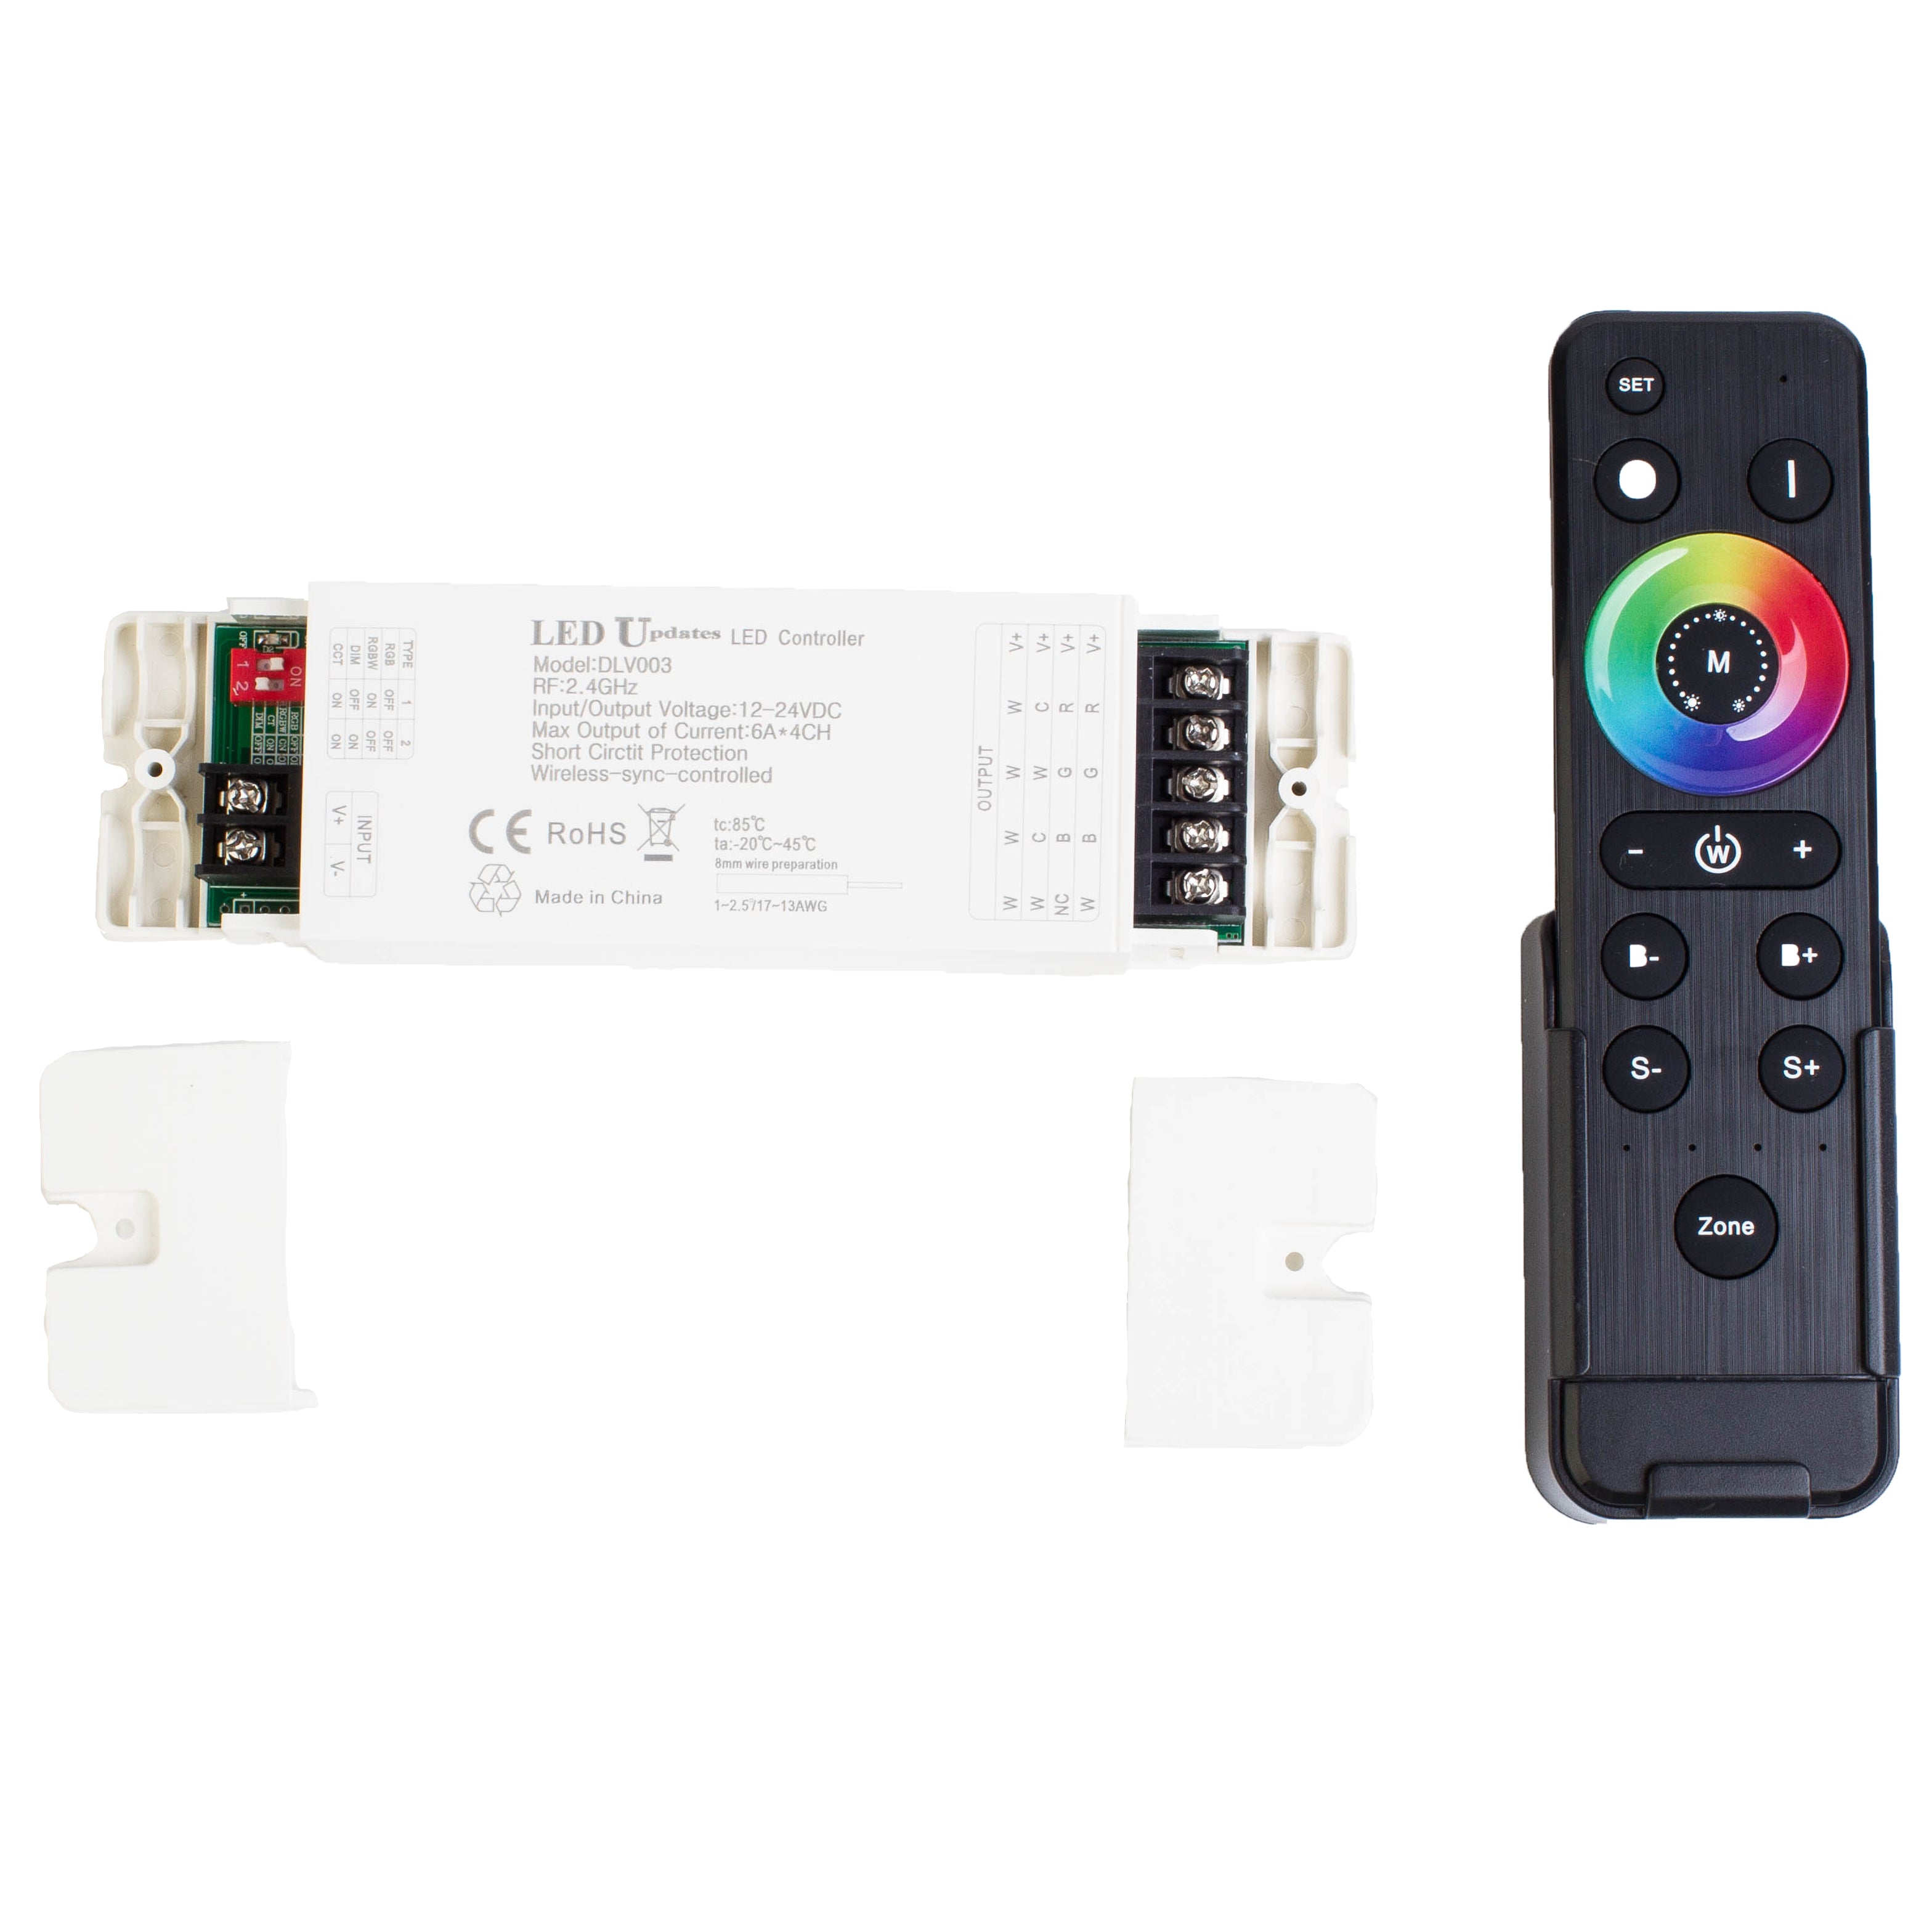 genstand Tidsplan Hverdage Wireless RGB +W + CCT + Single color LED Light Controller | LEDUpdates